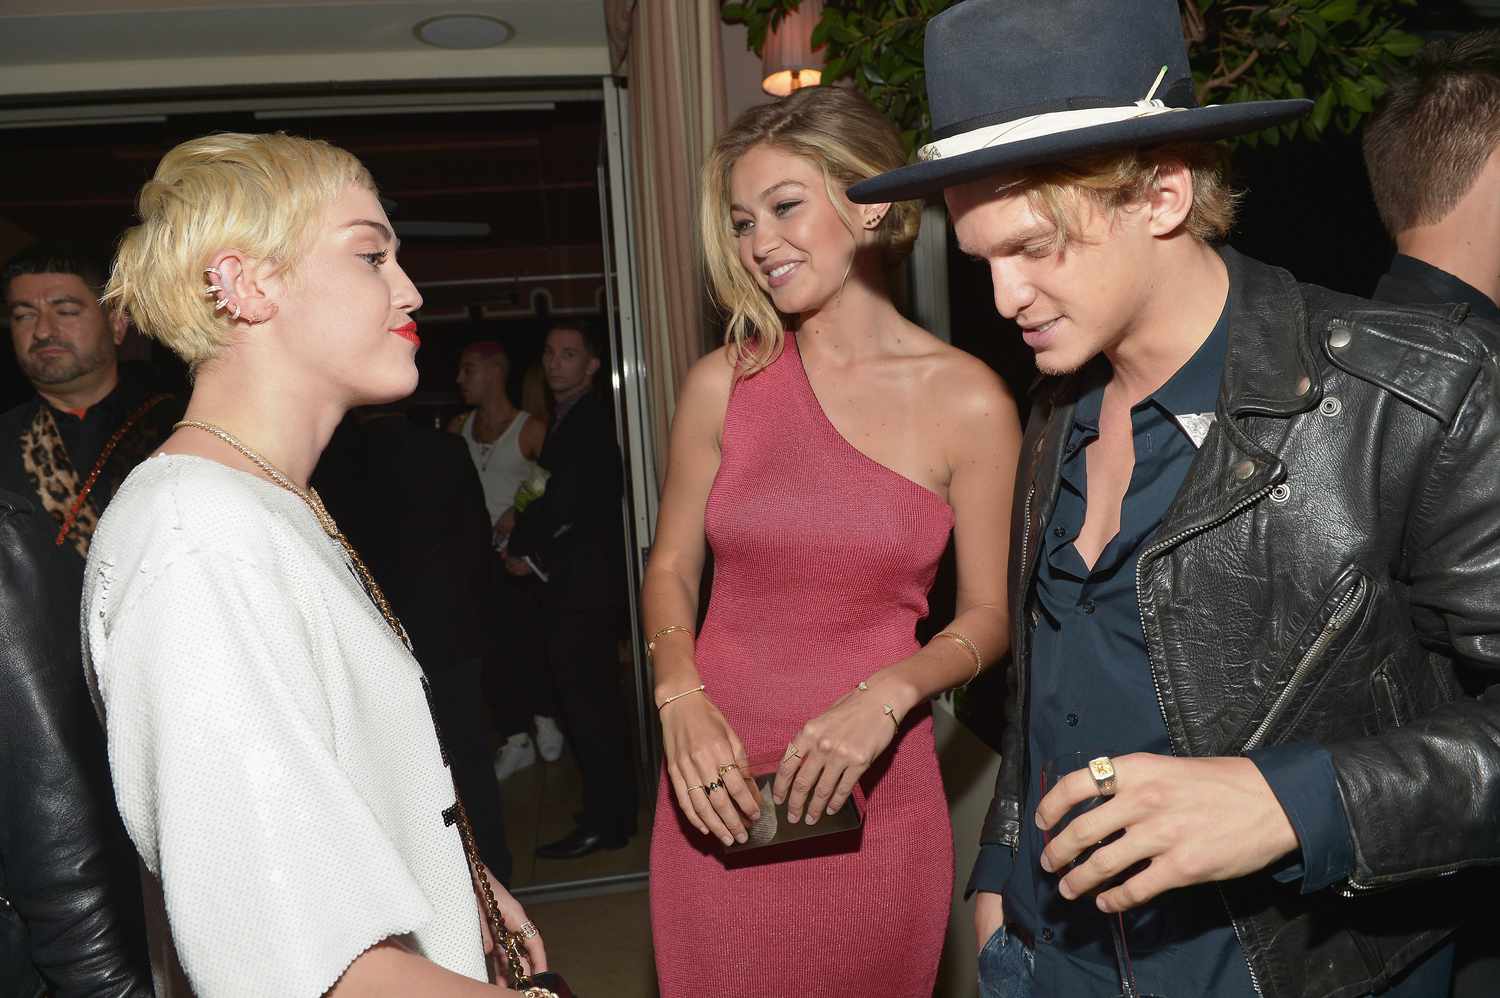 Miley Cyrus, honoree Gigi Hadid (L) and singer Cody Simpson